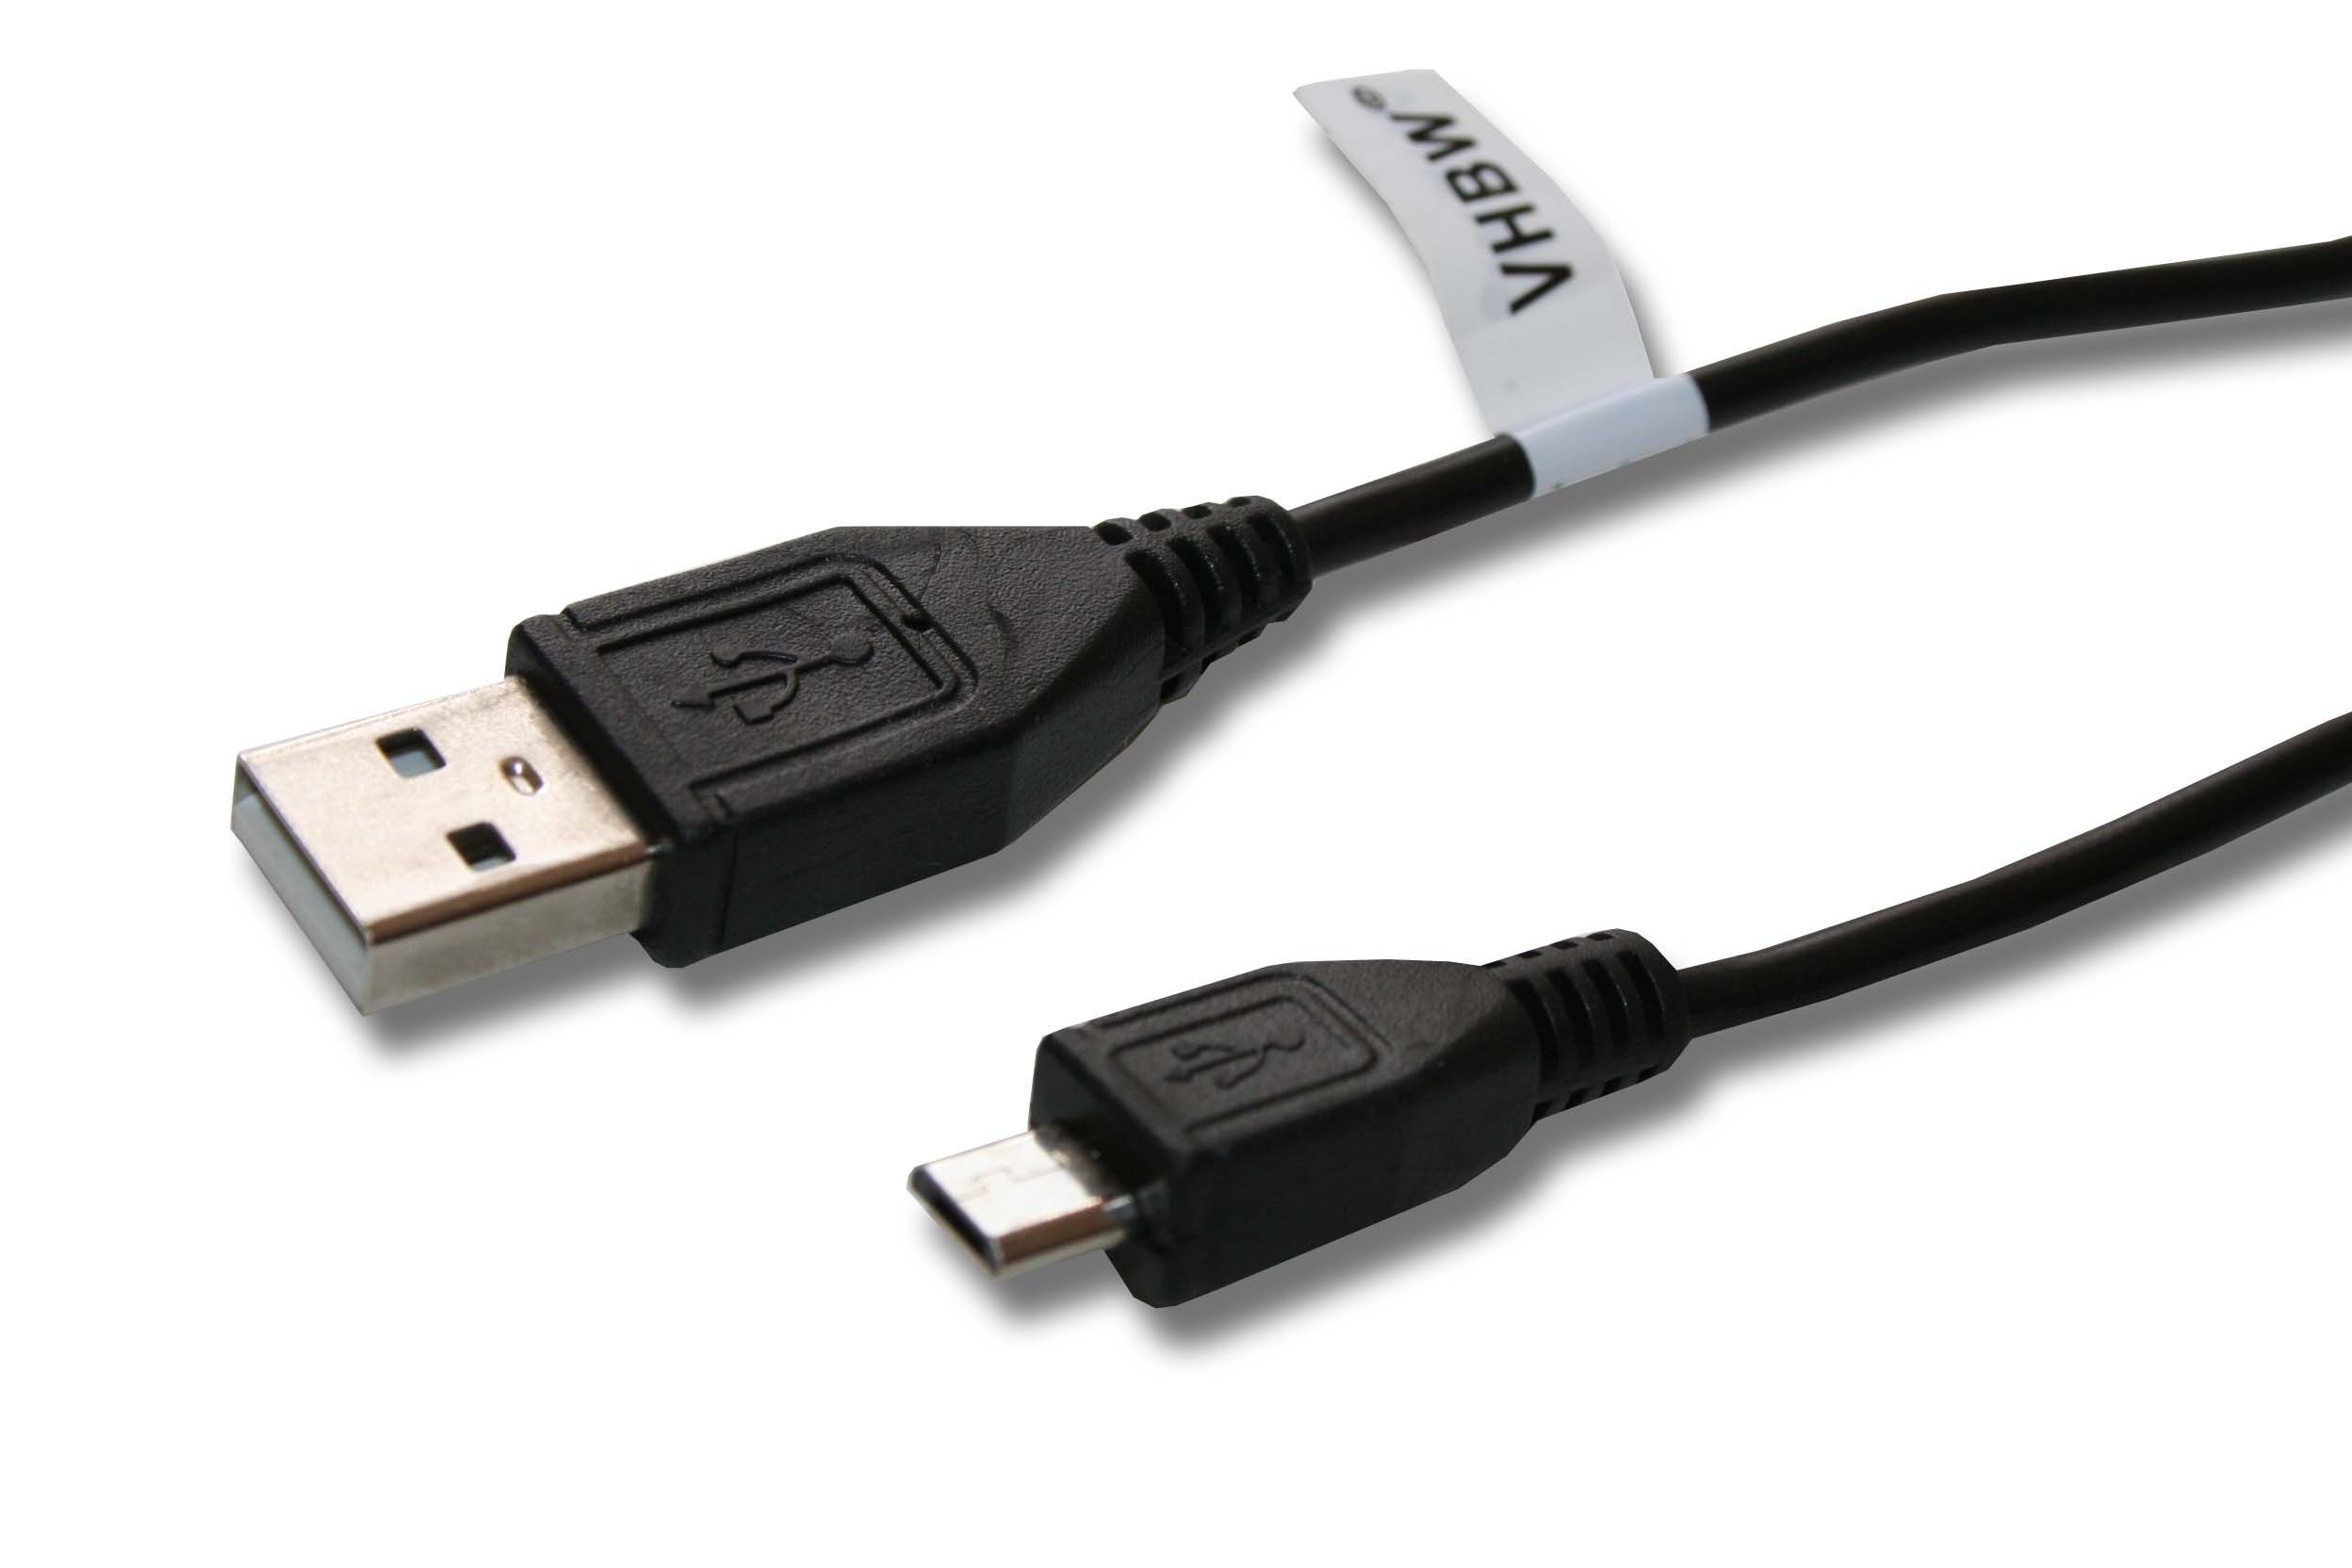 vhbw USB-Kabel, Micro-USB, passend für Olympia Viva Plus, Vox Colour Kamera